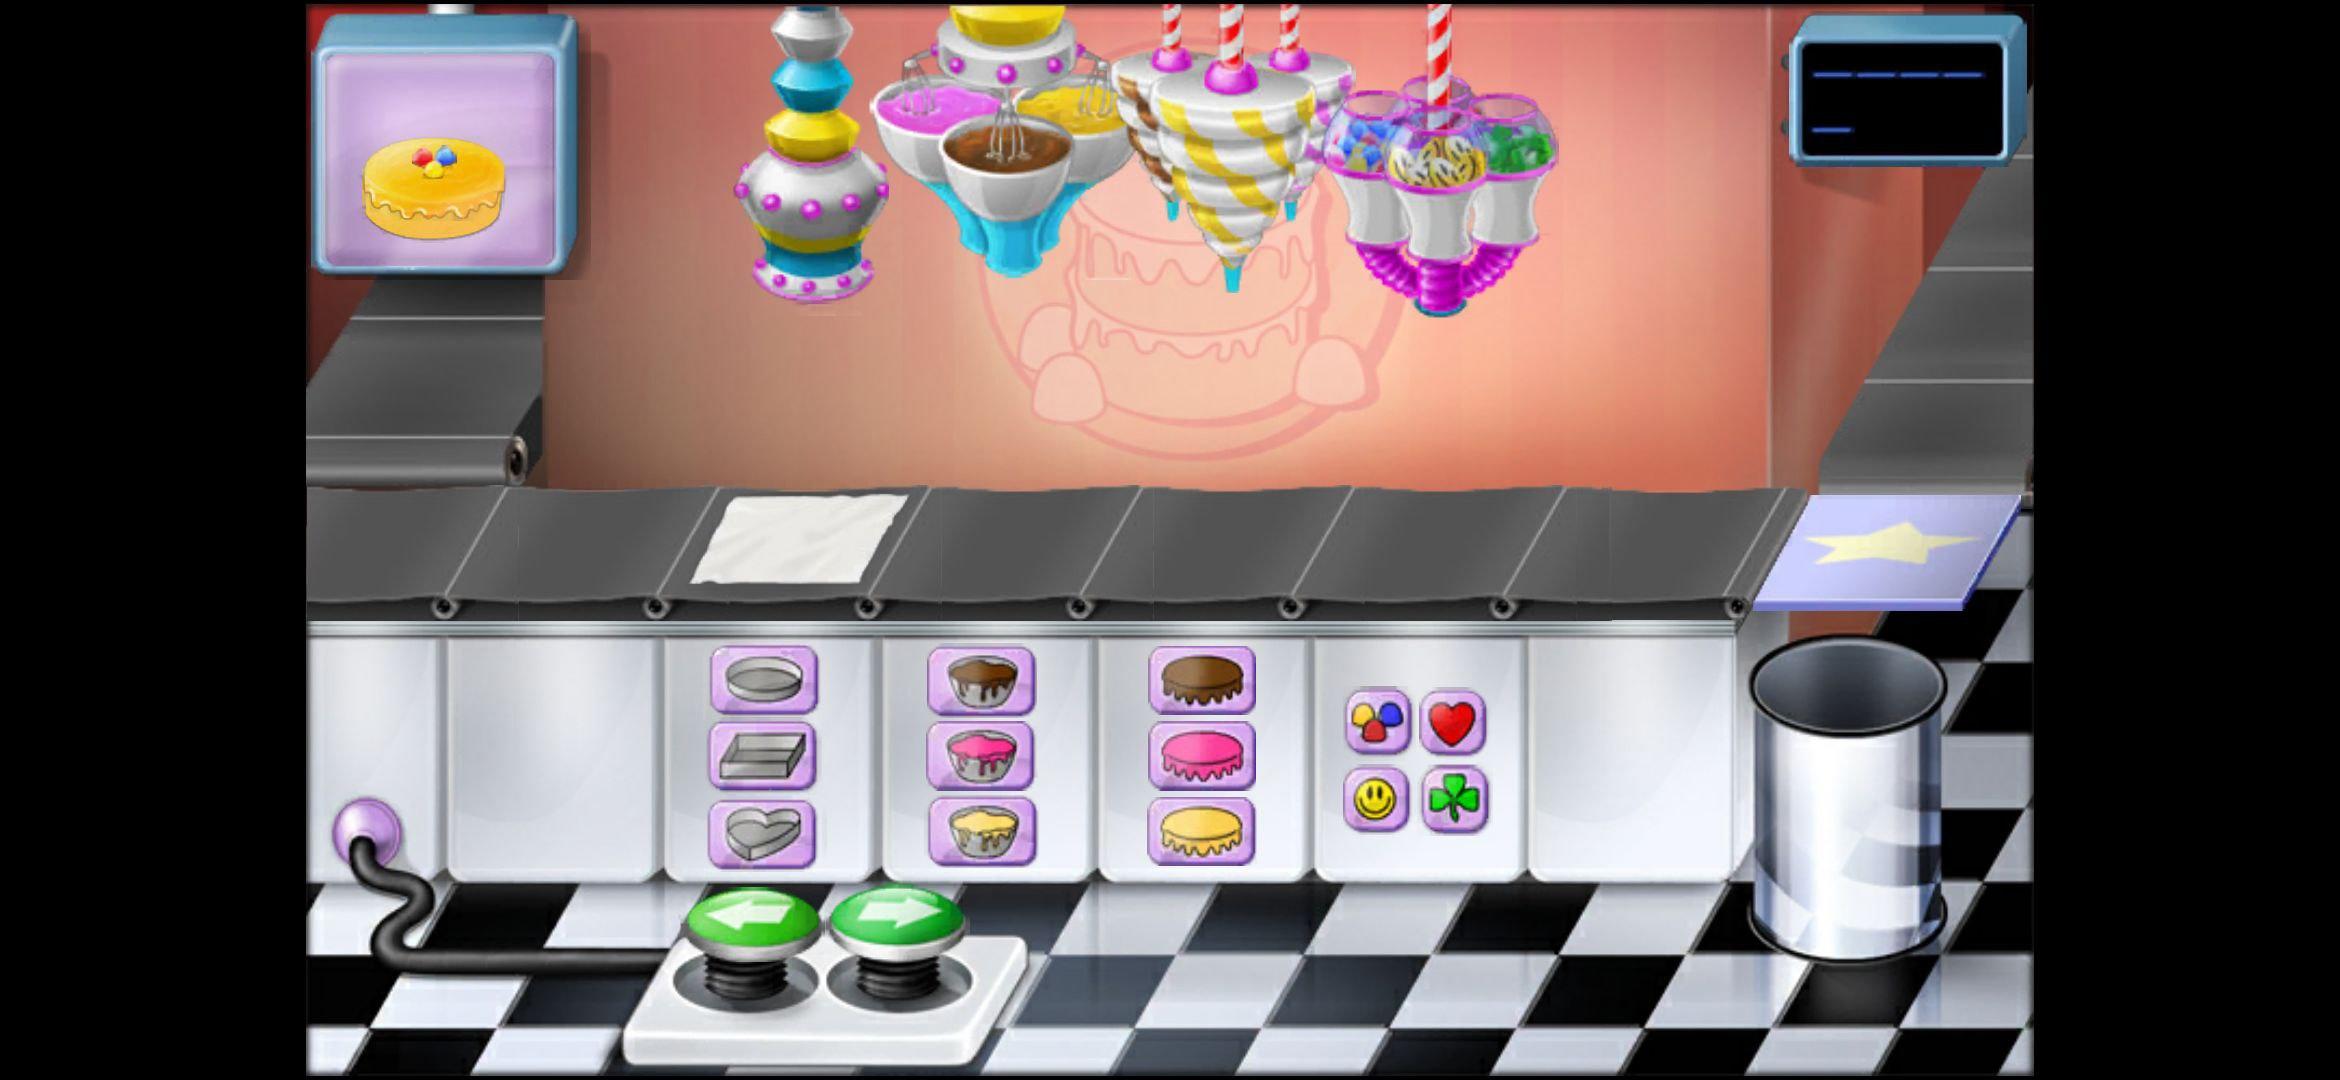 X-box Cake | Gamer Cake | Game Controller Cake – Rolling In Dough Bakery